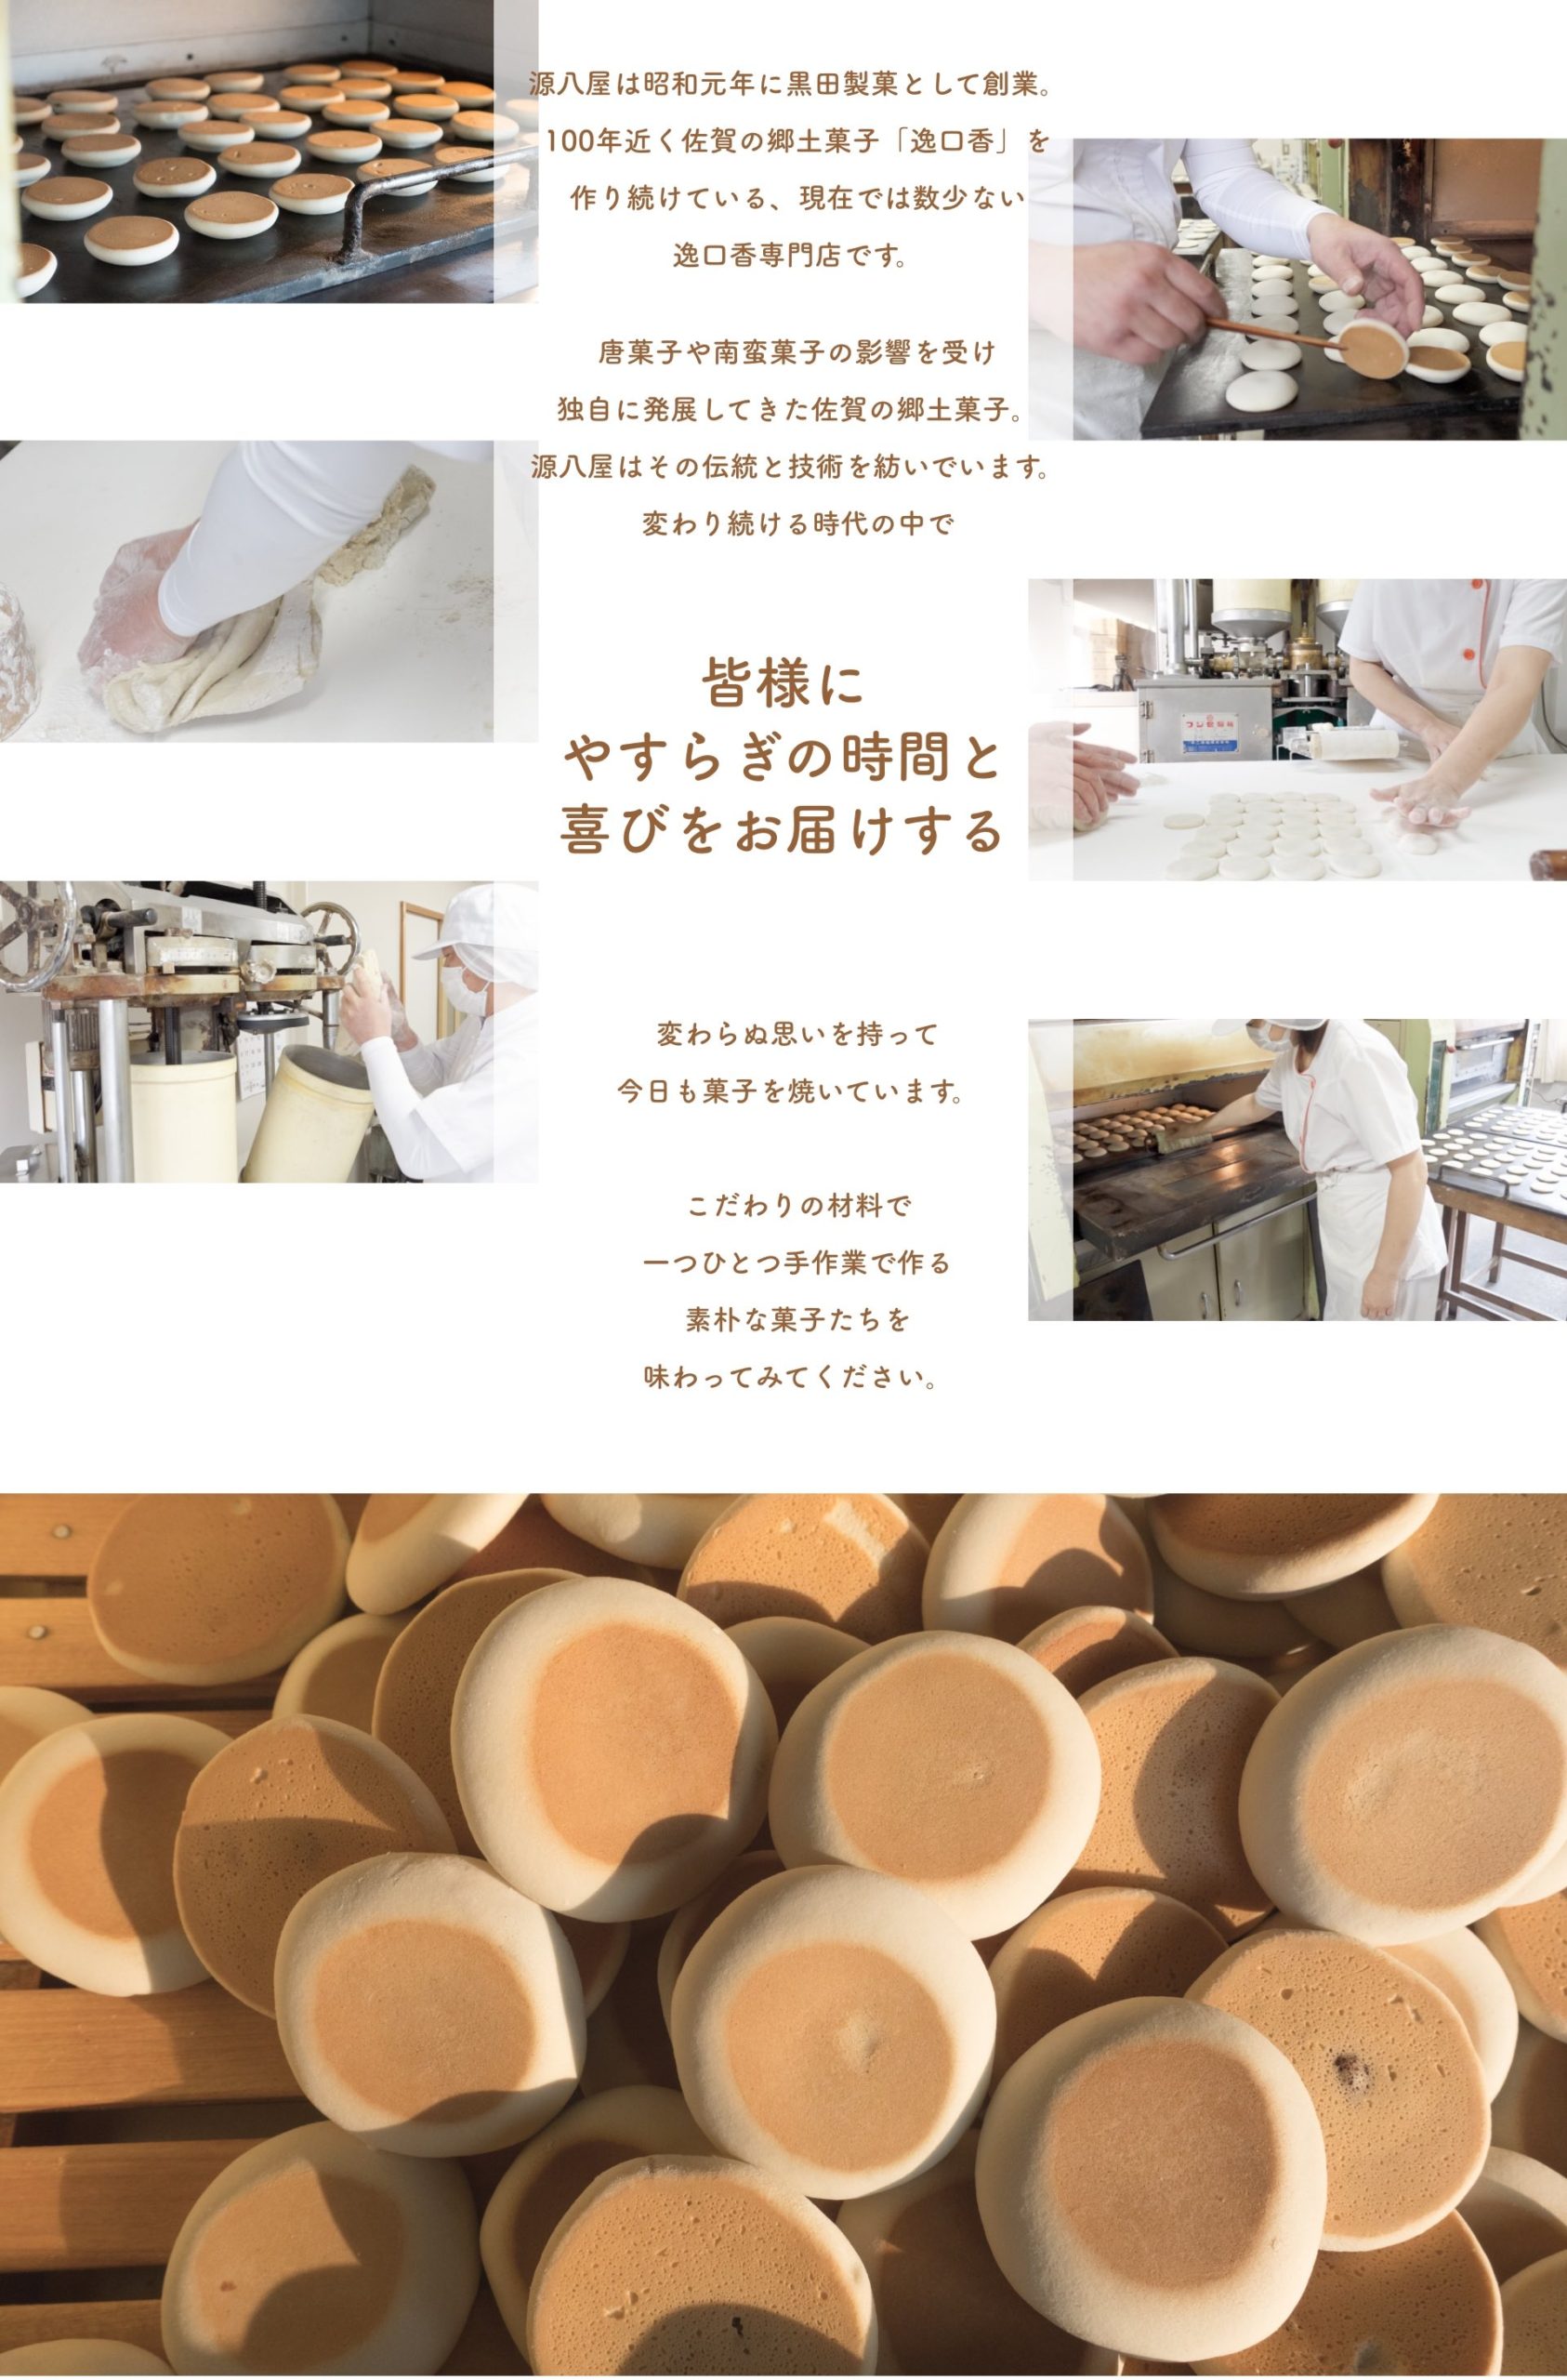 Chaikoチャイコ。ミルクティーのためのおやつ。佐賀県の郷土菓子を製造する源八屋による新しい佐賀のおやつ。